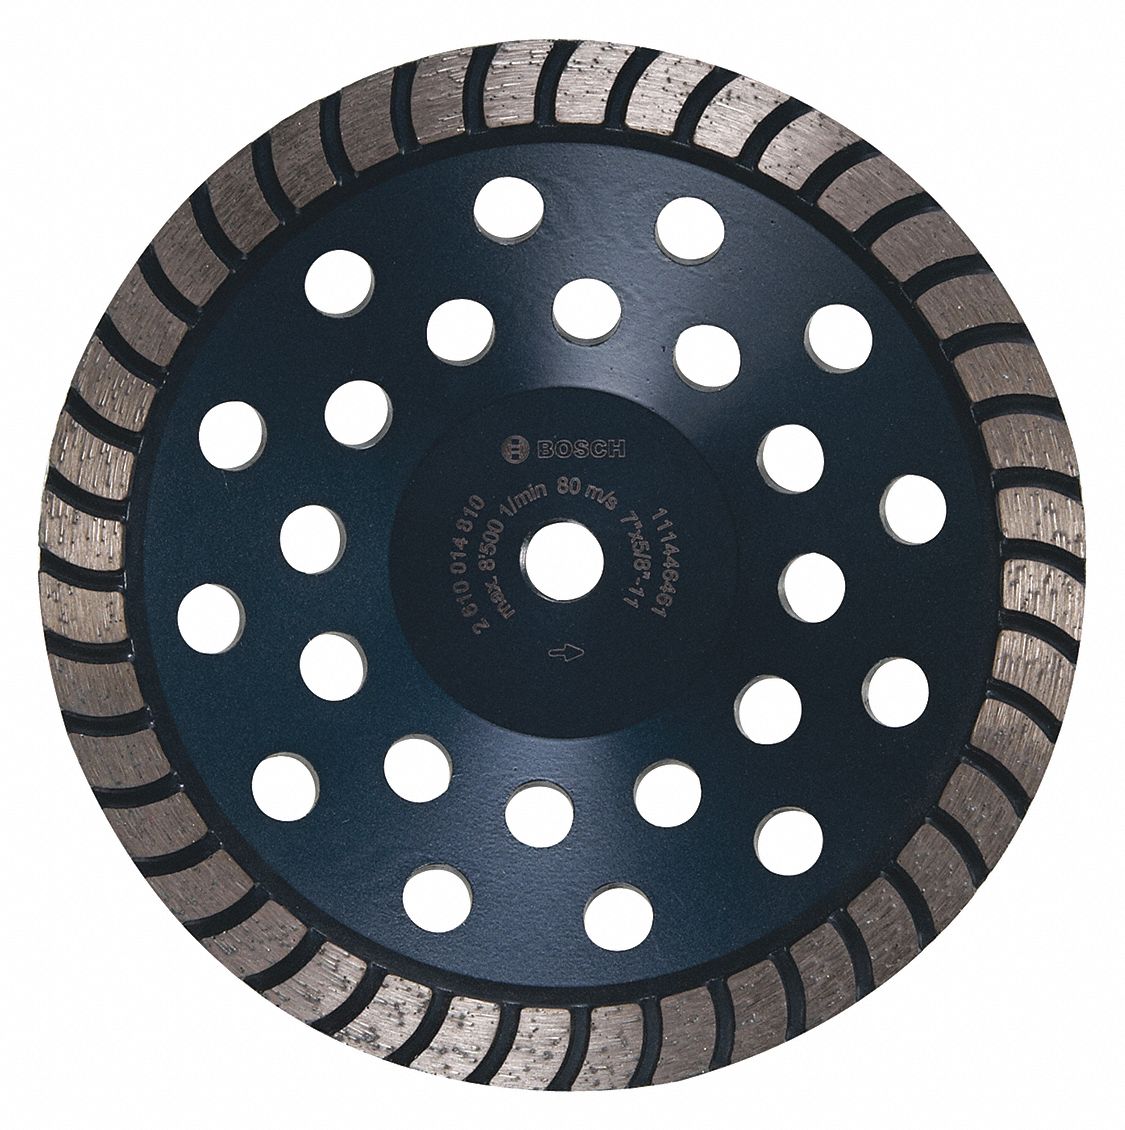 44M793 - 7In Turbo Row Diamond Cup Wheel